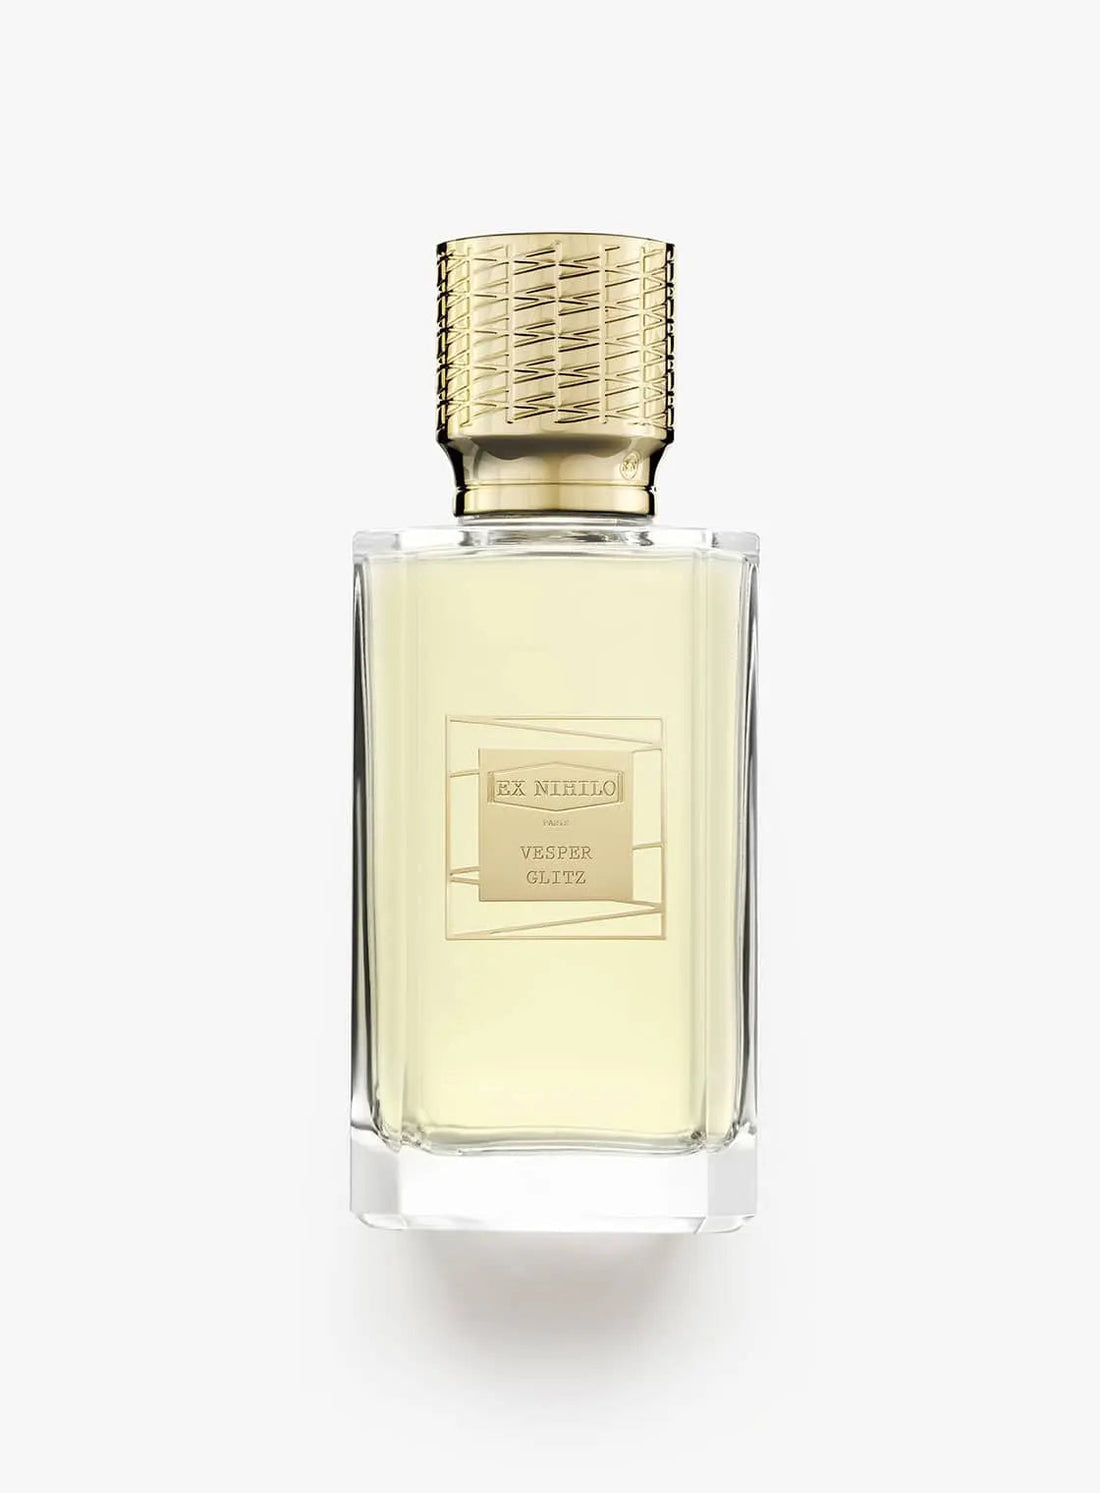 Ex nihilo Vesper Glitz eau de parfum - 100 ml